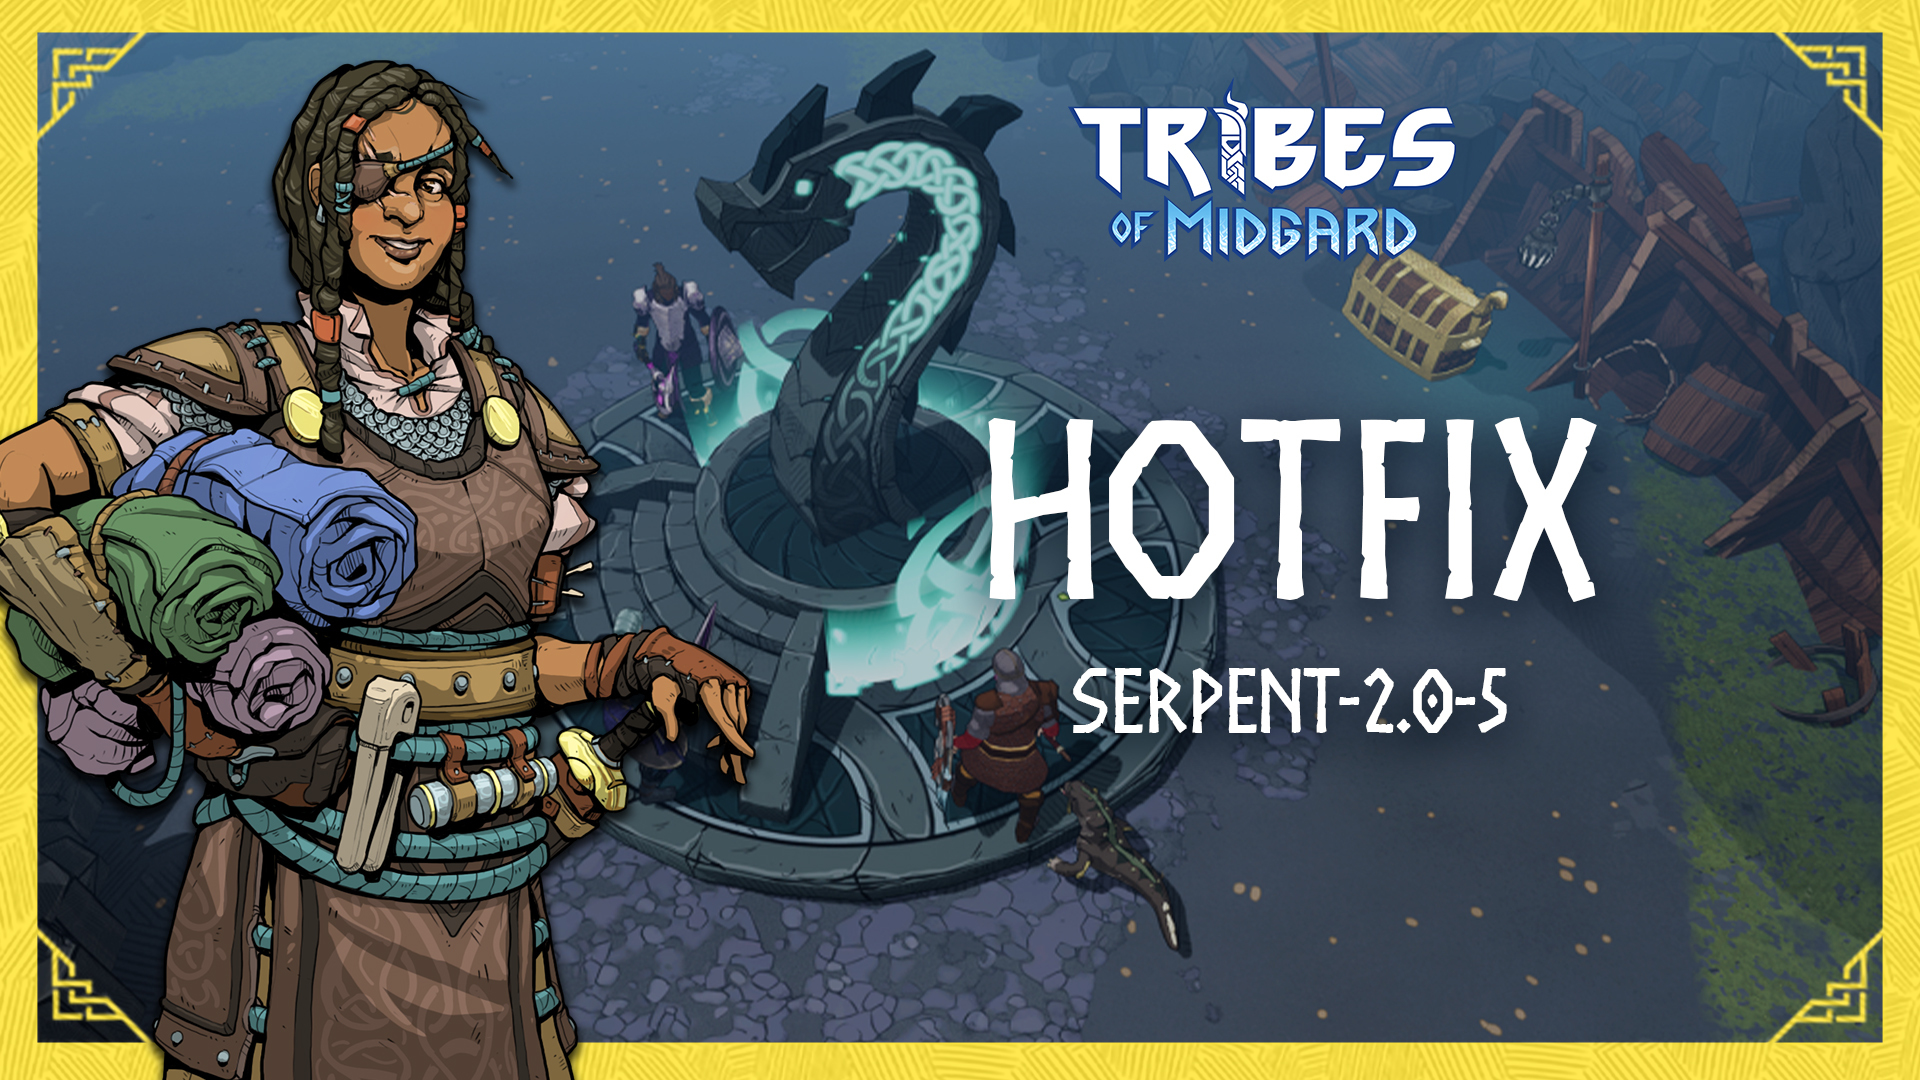 Hotfix: Serpent-2.0-5